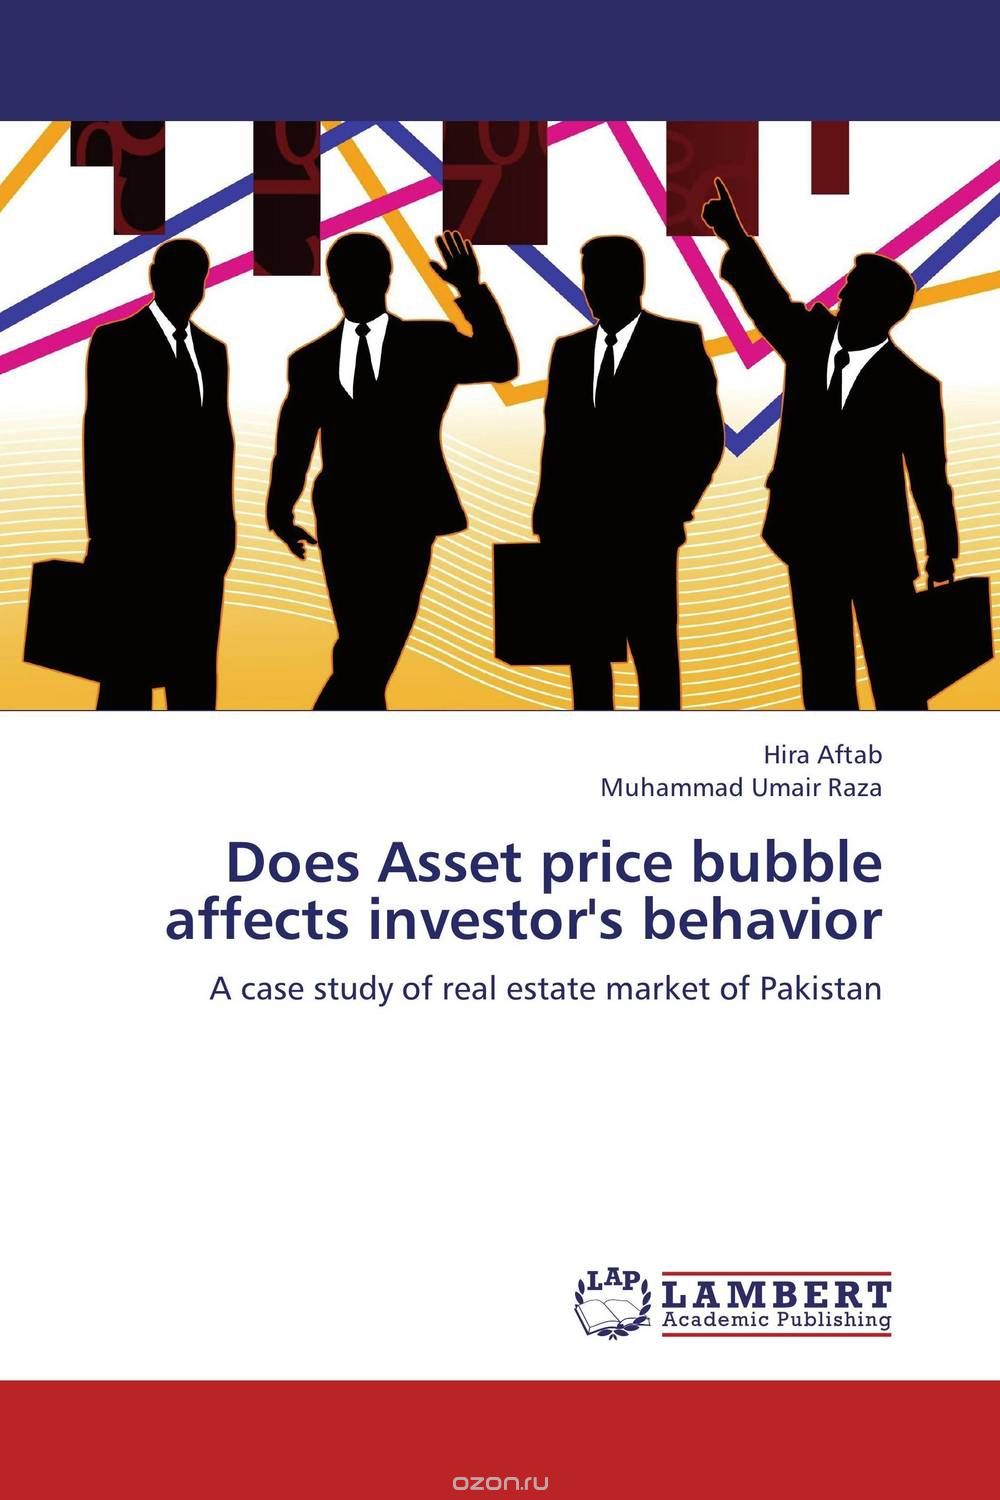 Скачать книгу "Does Asset price bubble affects investor's behavior"